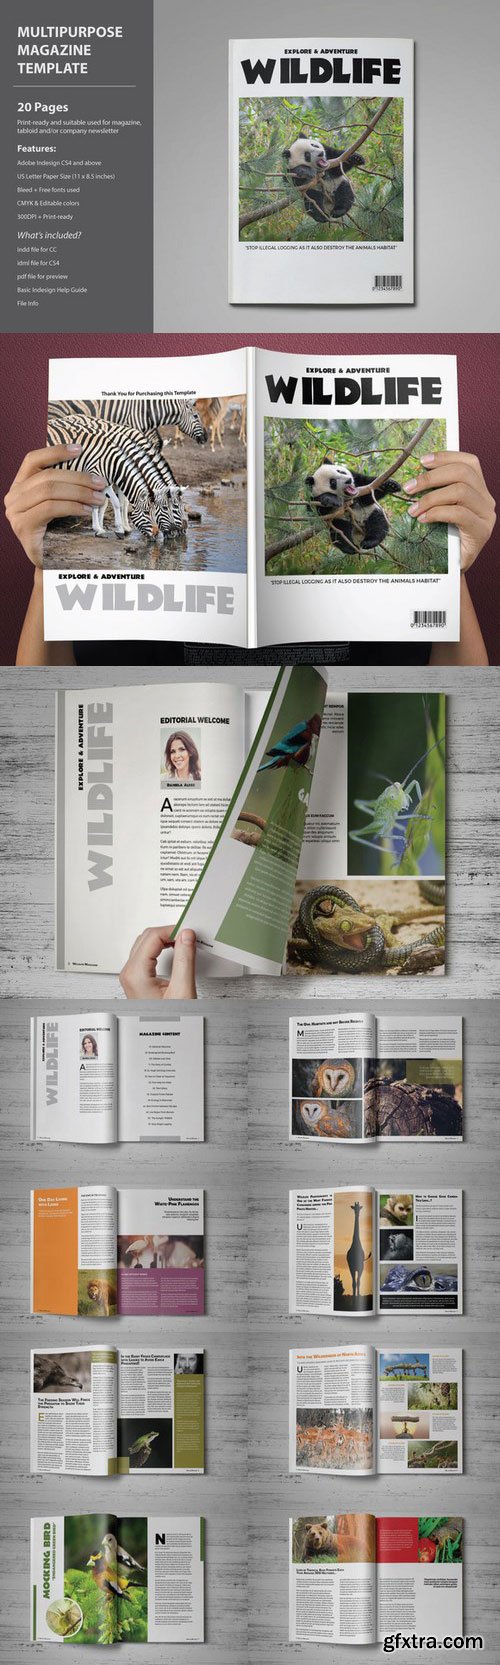 CM - Wildlife Magazine Template 329019